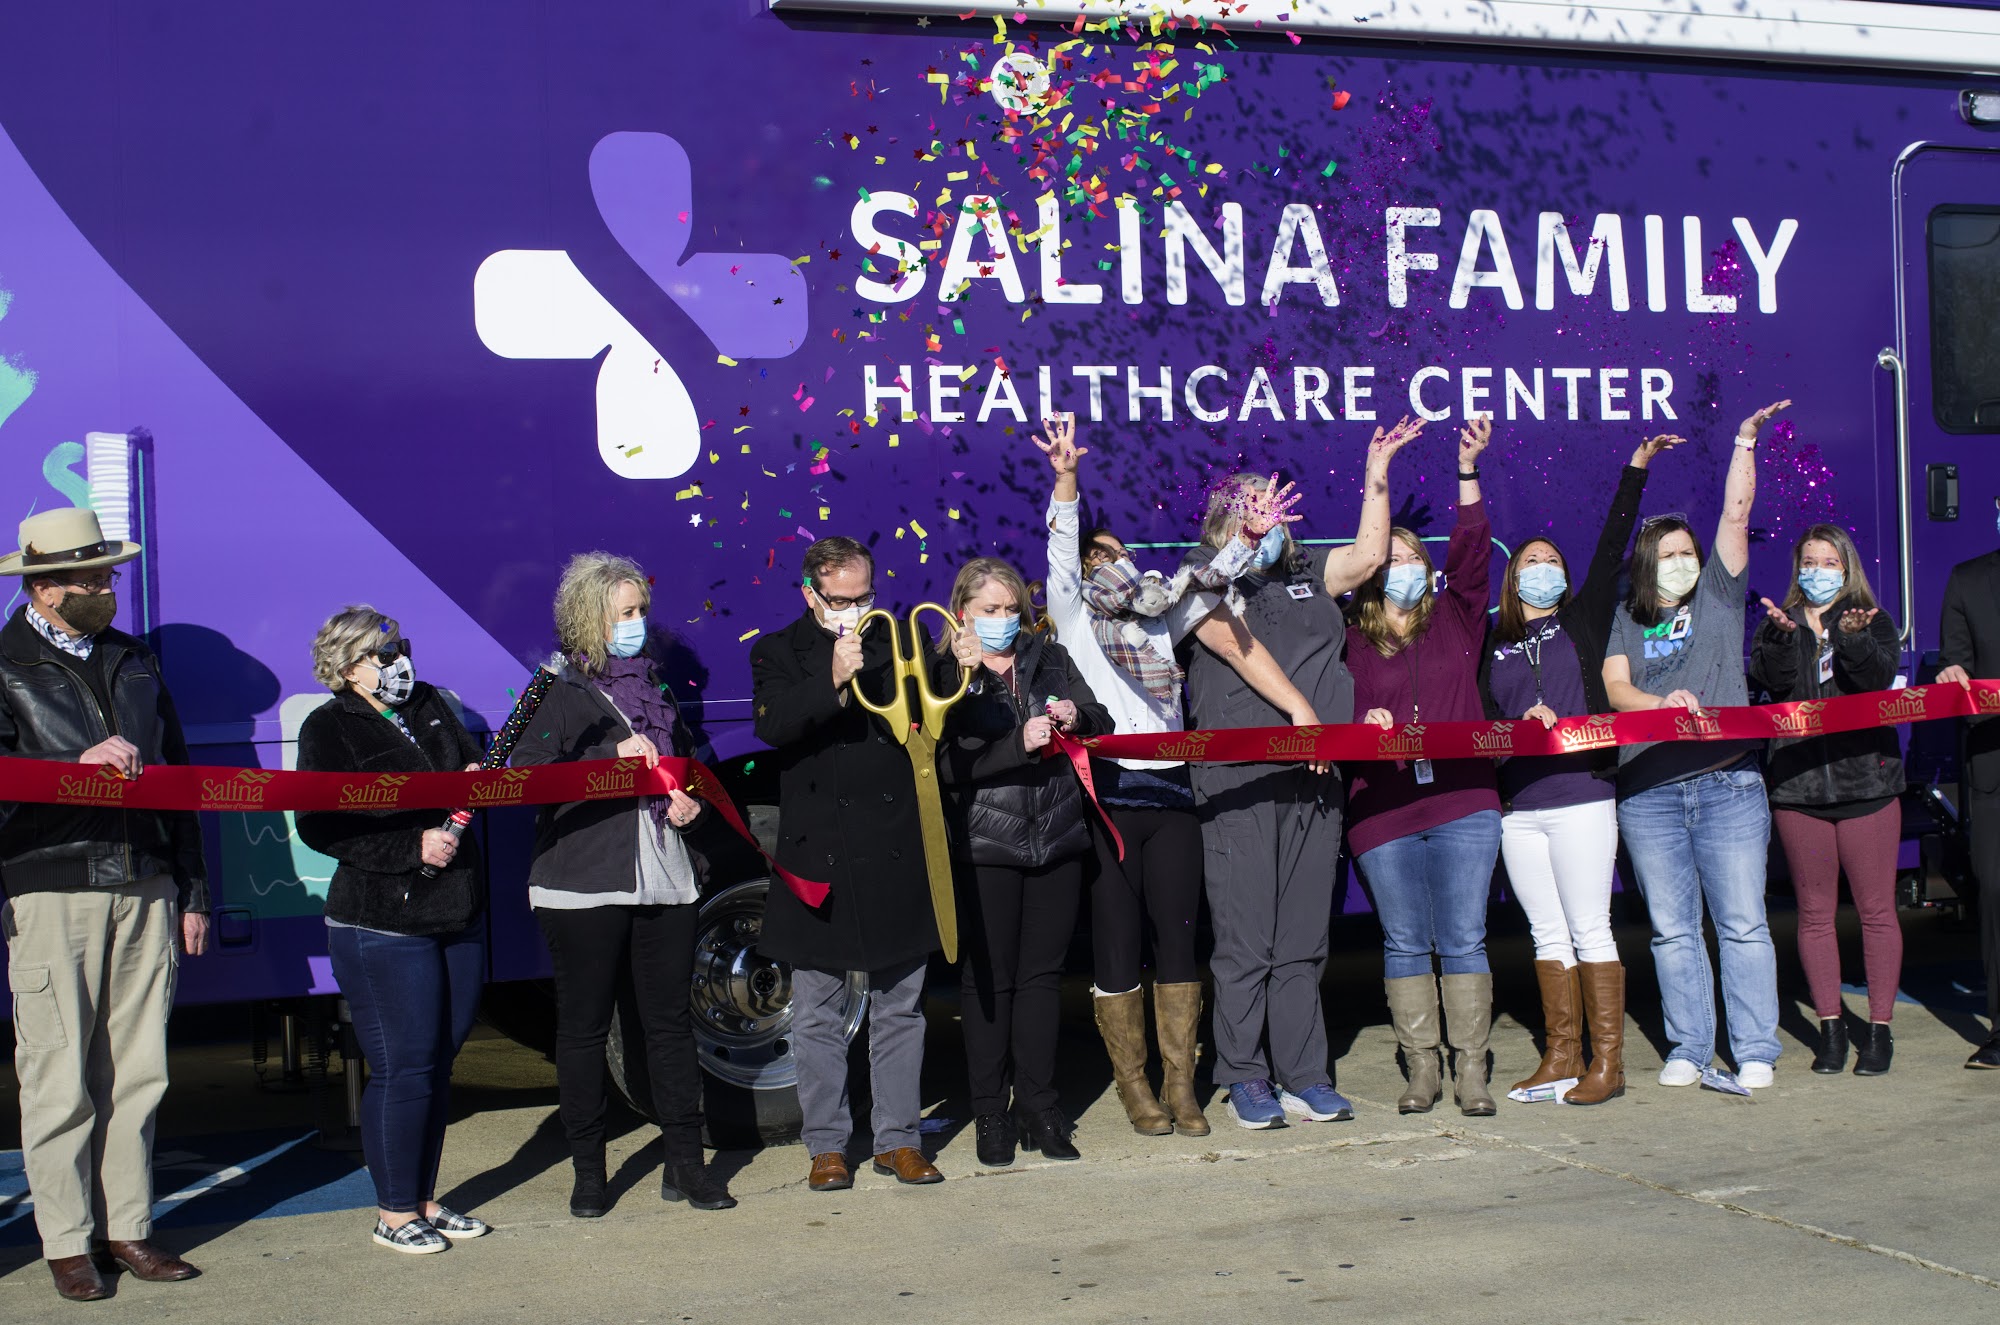 Salina Family Healthcare Center